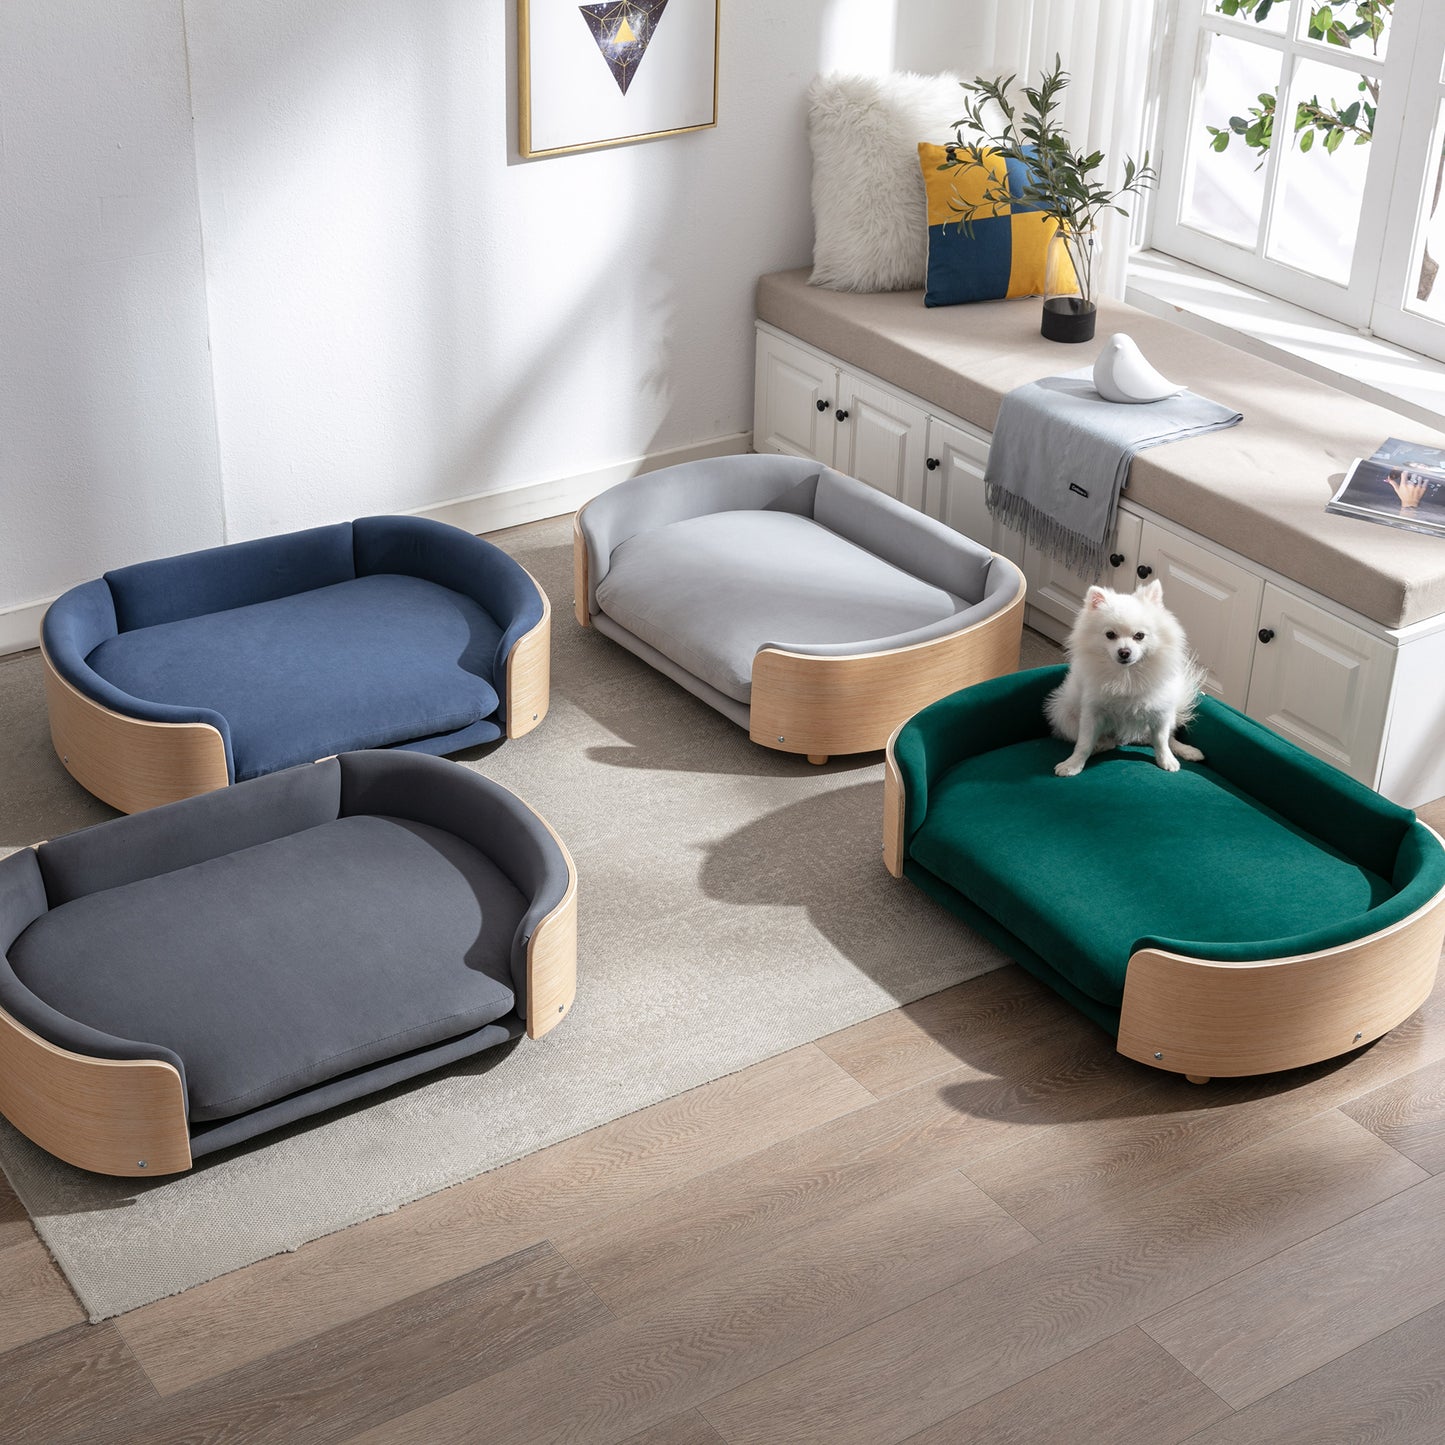 Scandinavian style Elevated Dog Bed Cat Litter Box Furniture Hidden Litterbox Enclosure - Large